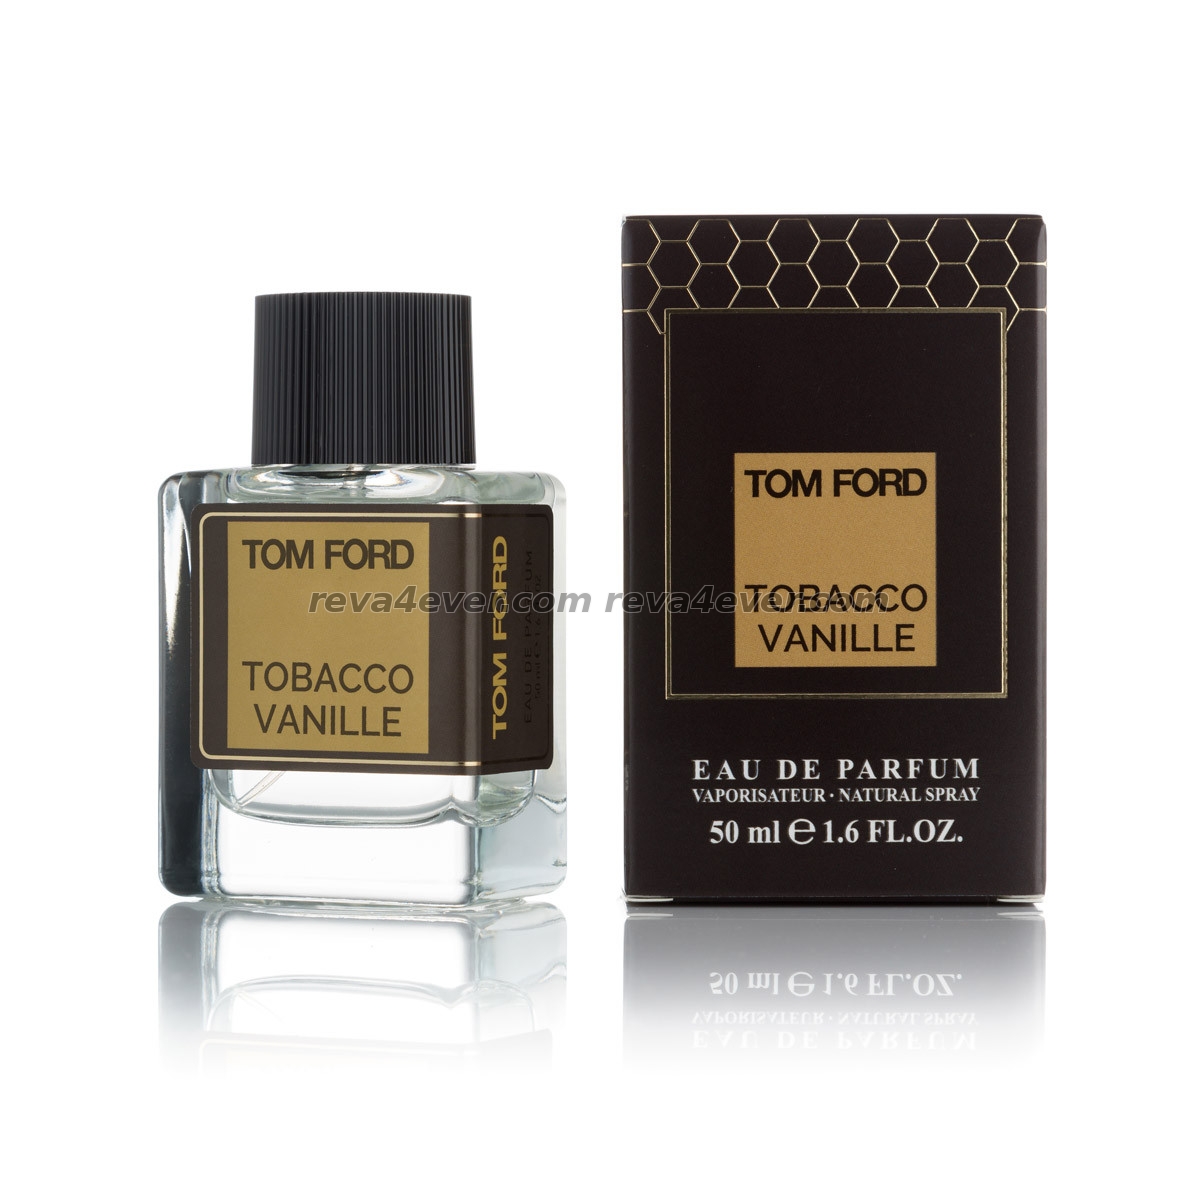 Tom Ford Tobacco Vanille edp 50 ml color box